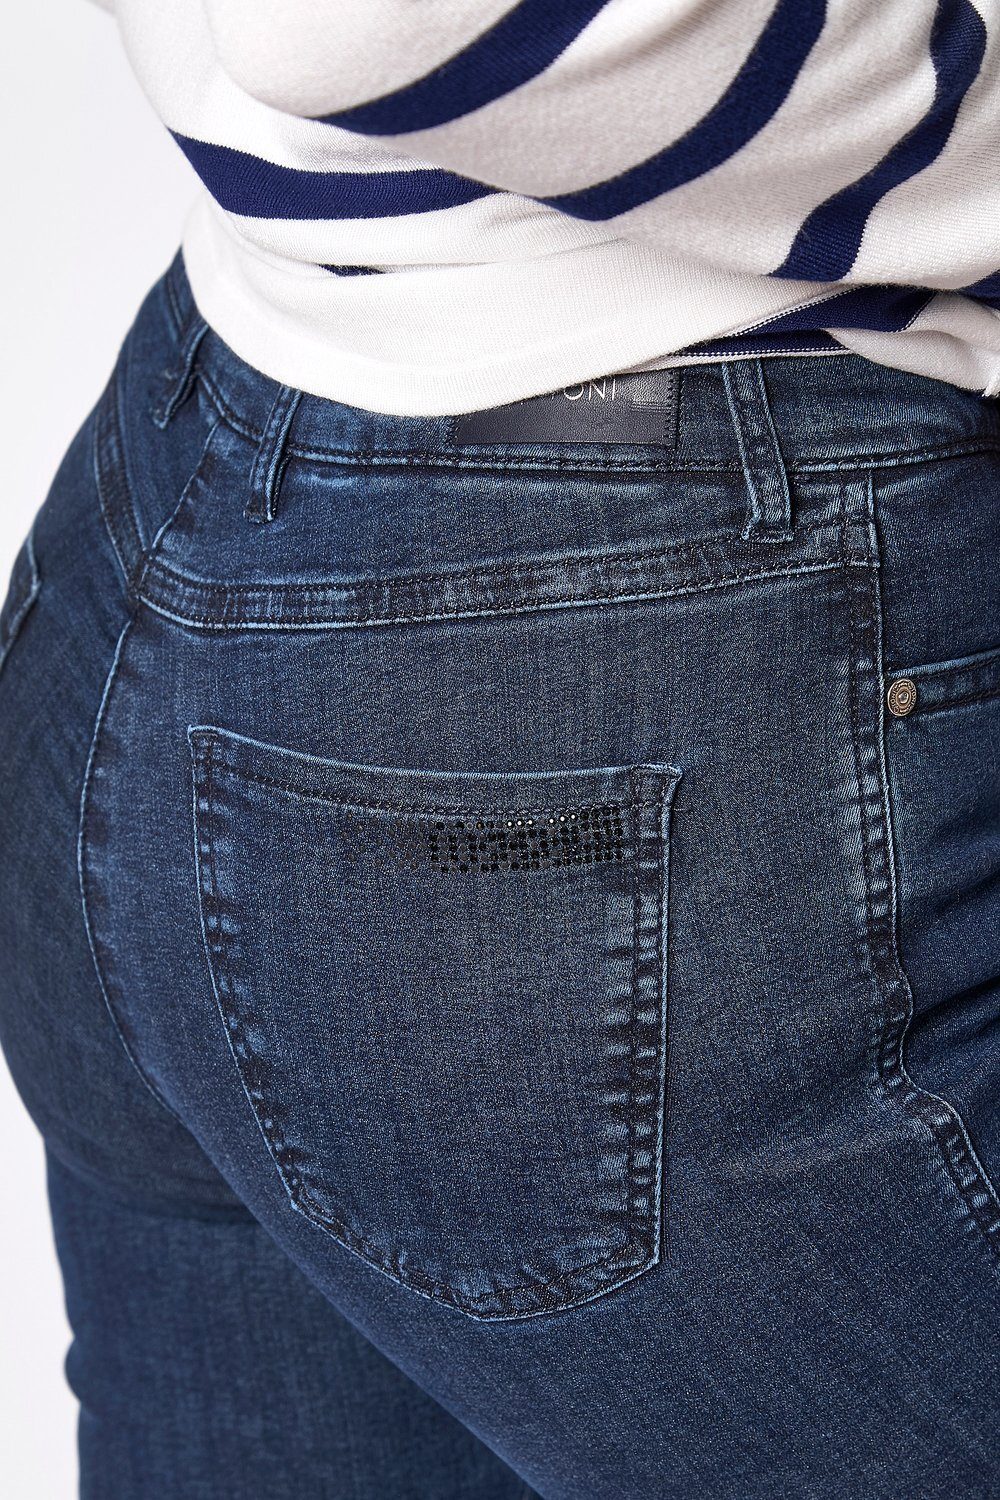 - 5-Pocket-Jeans mit loved dunkelblau TONI be 582 Leibhöhe hoher